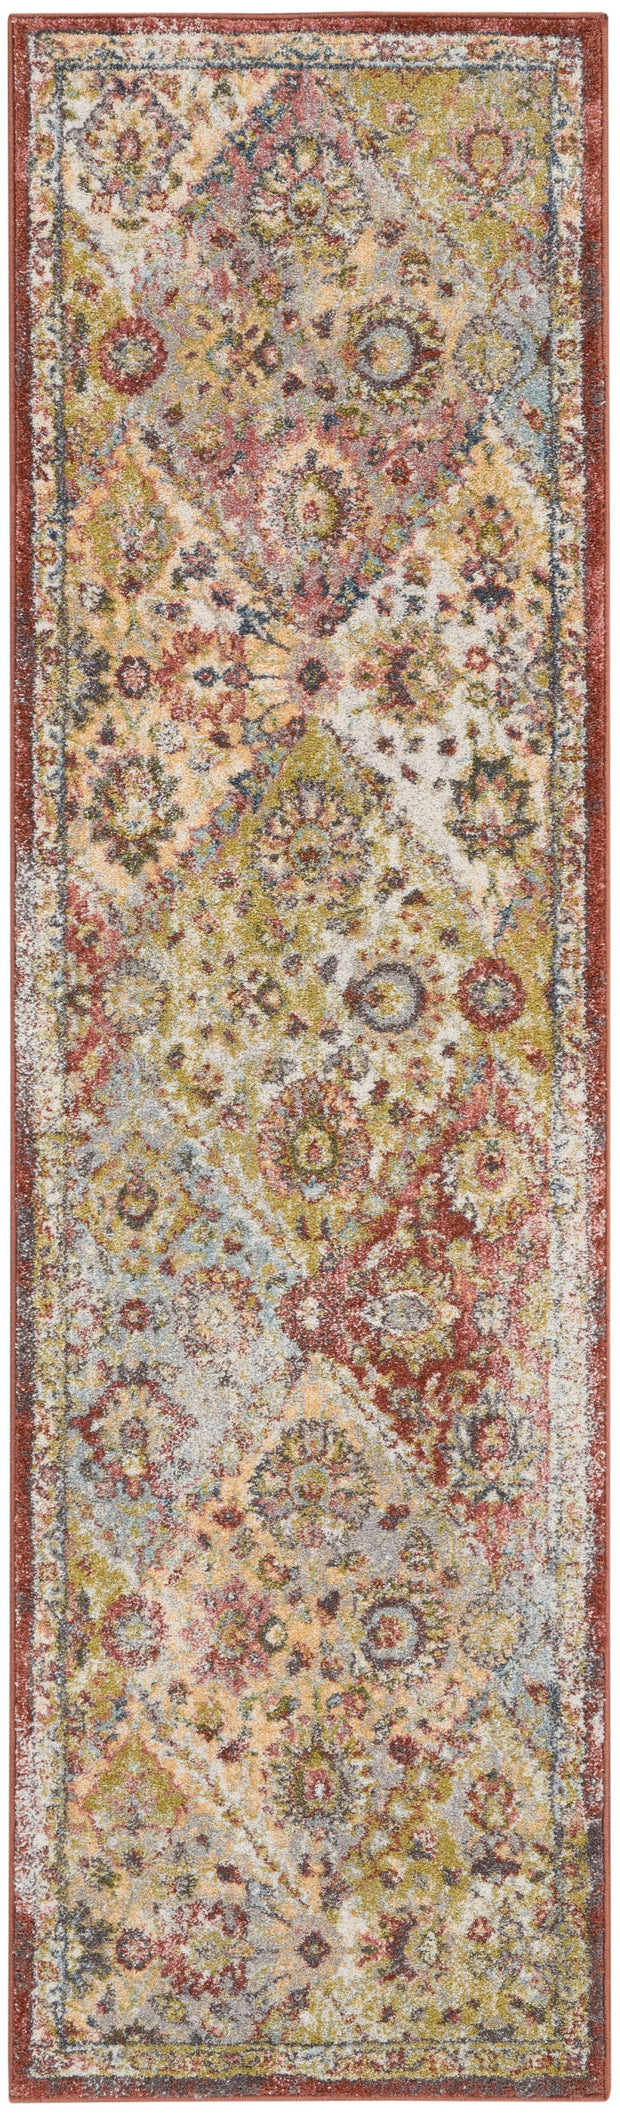 soraya terracotta multicolor rug by nourison 99446803351 redo 2